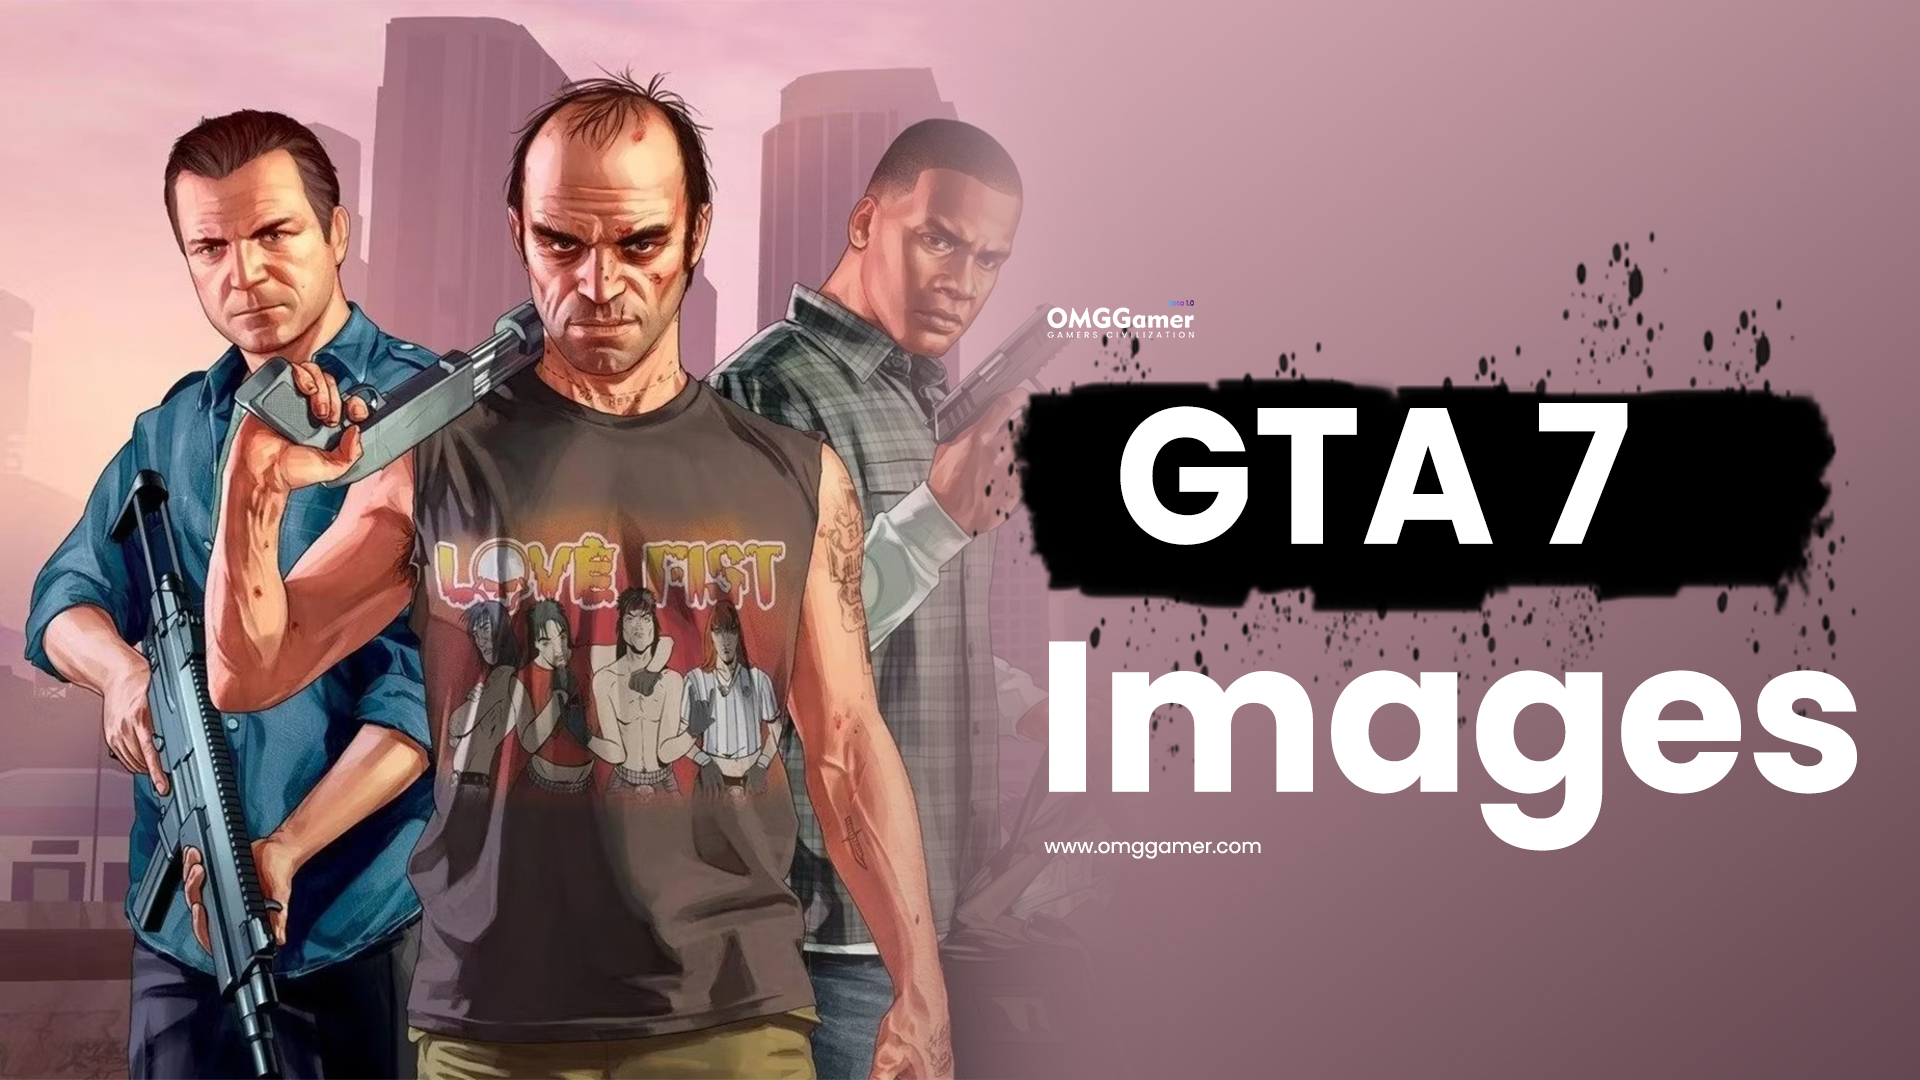 GTA 7 Images